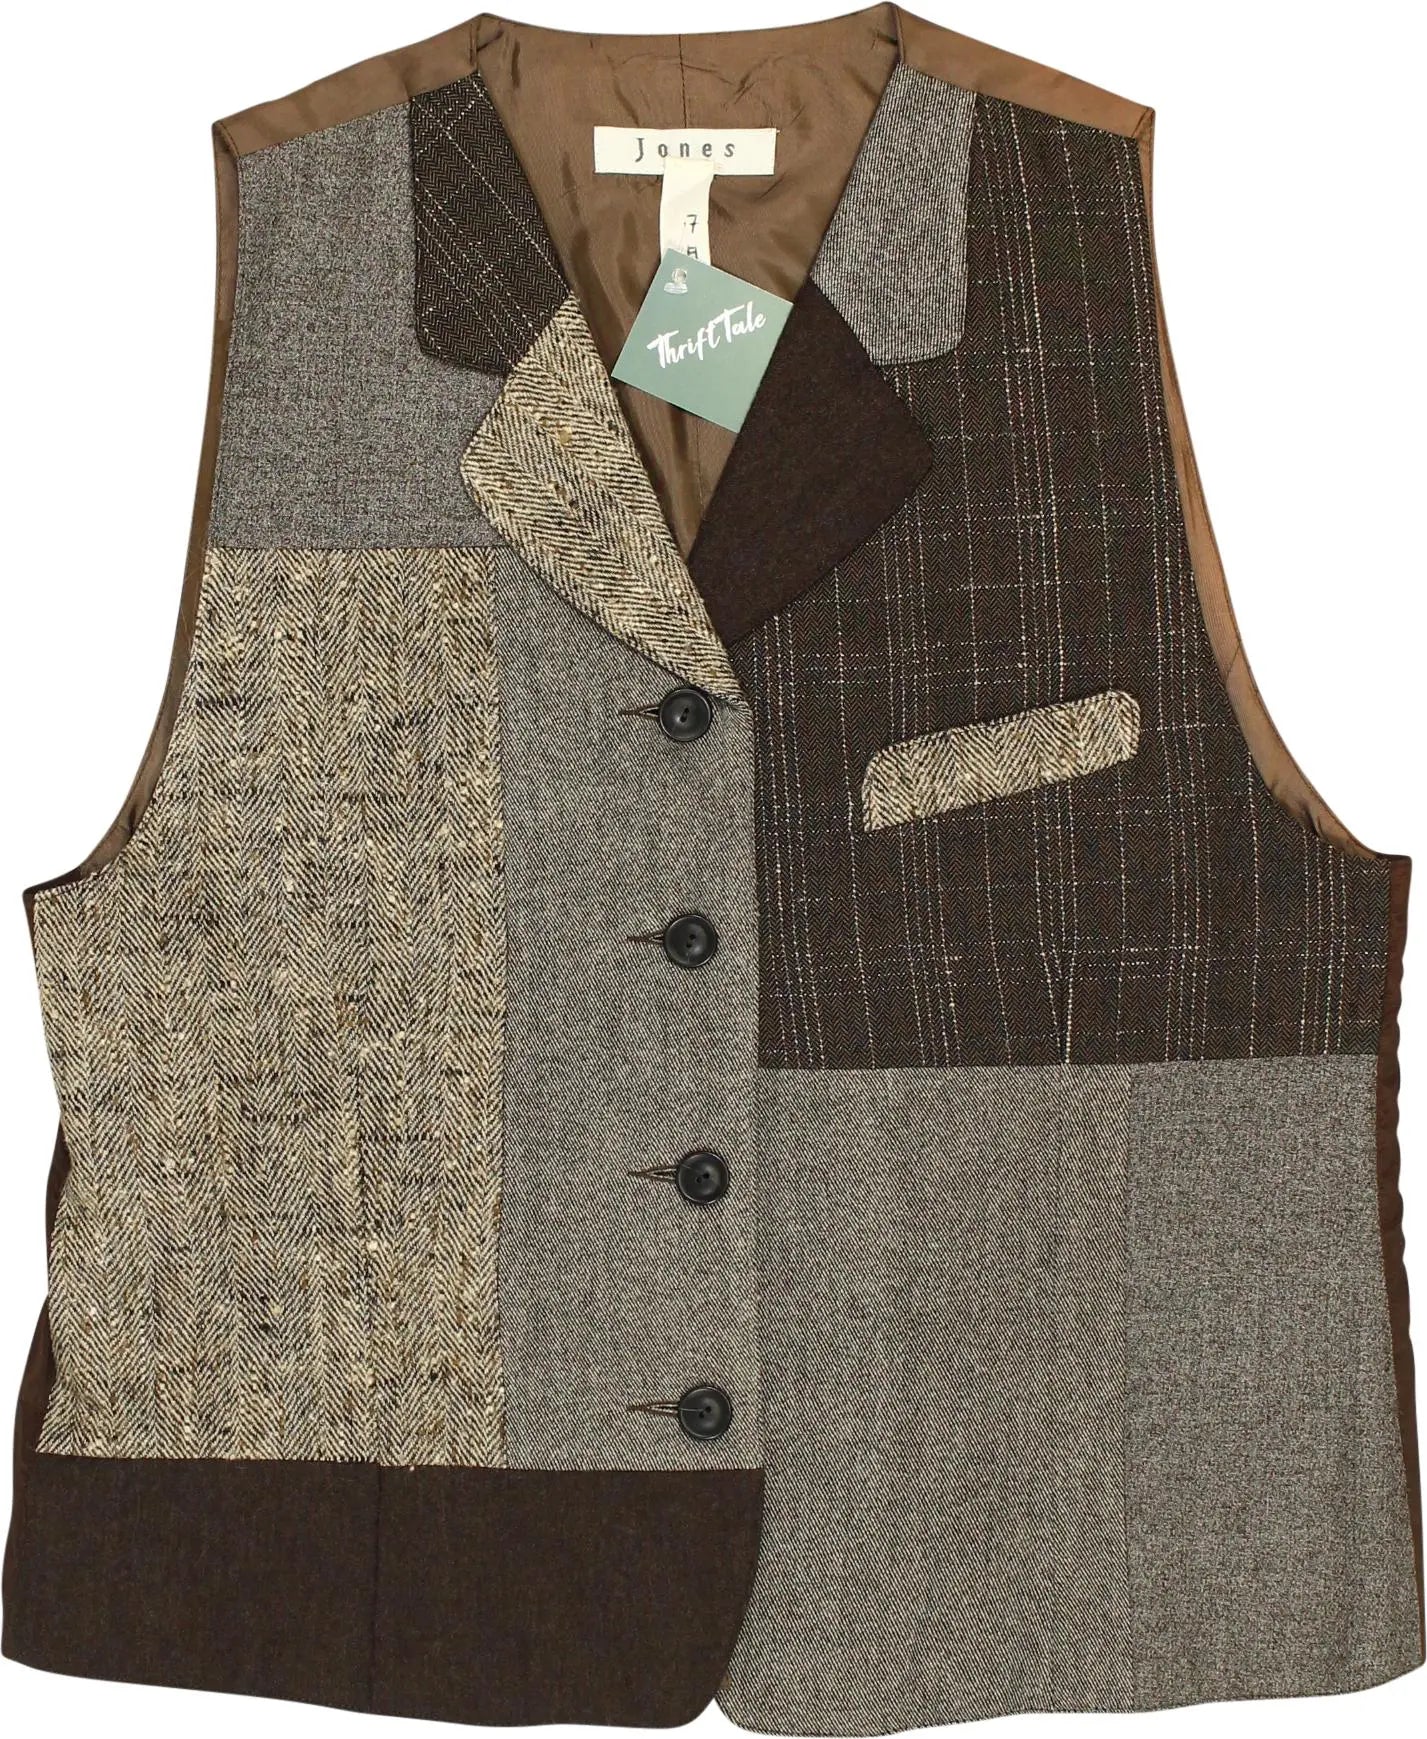 Jones - Tweed Patchwork Waistcoat- ThriftTale.com - Vintage and second handclothing